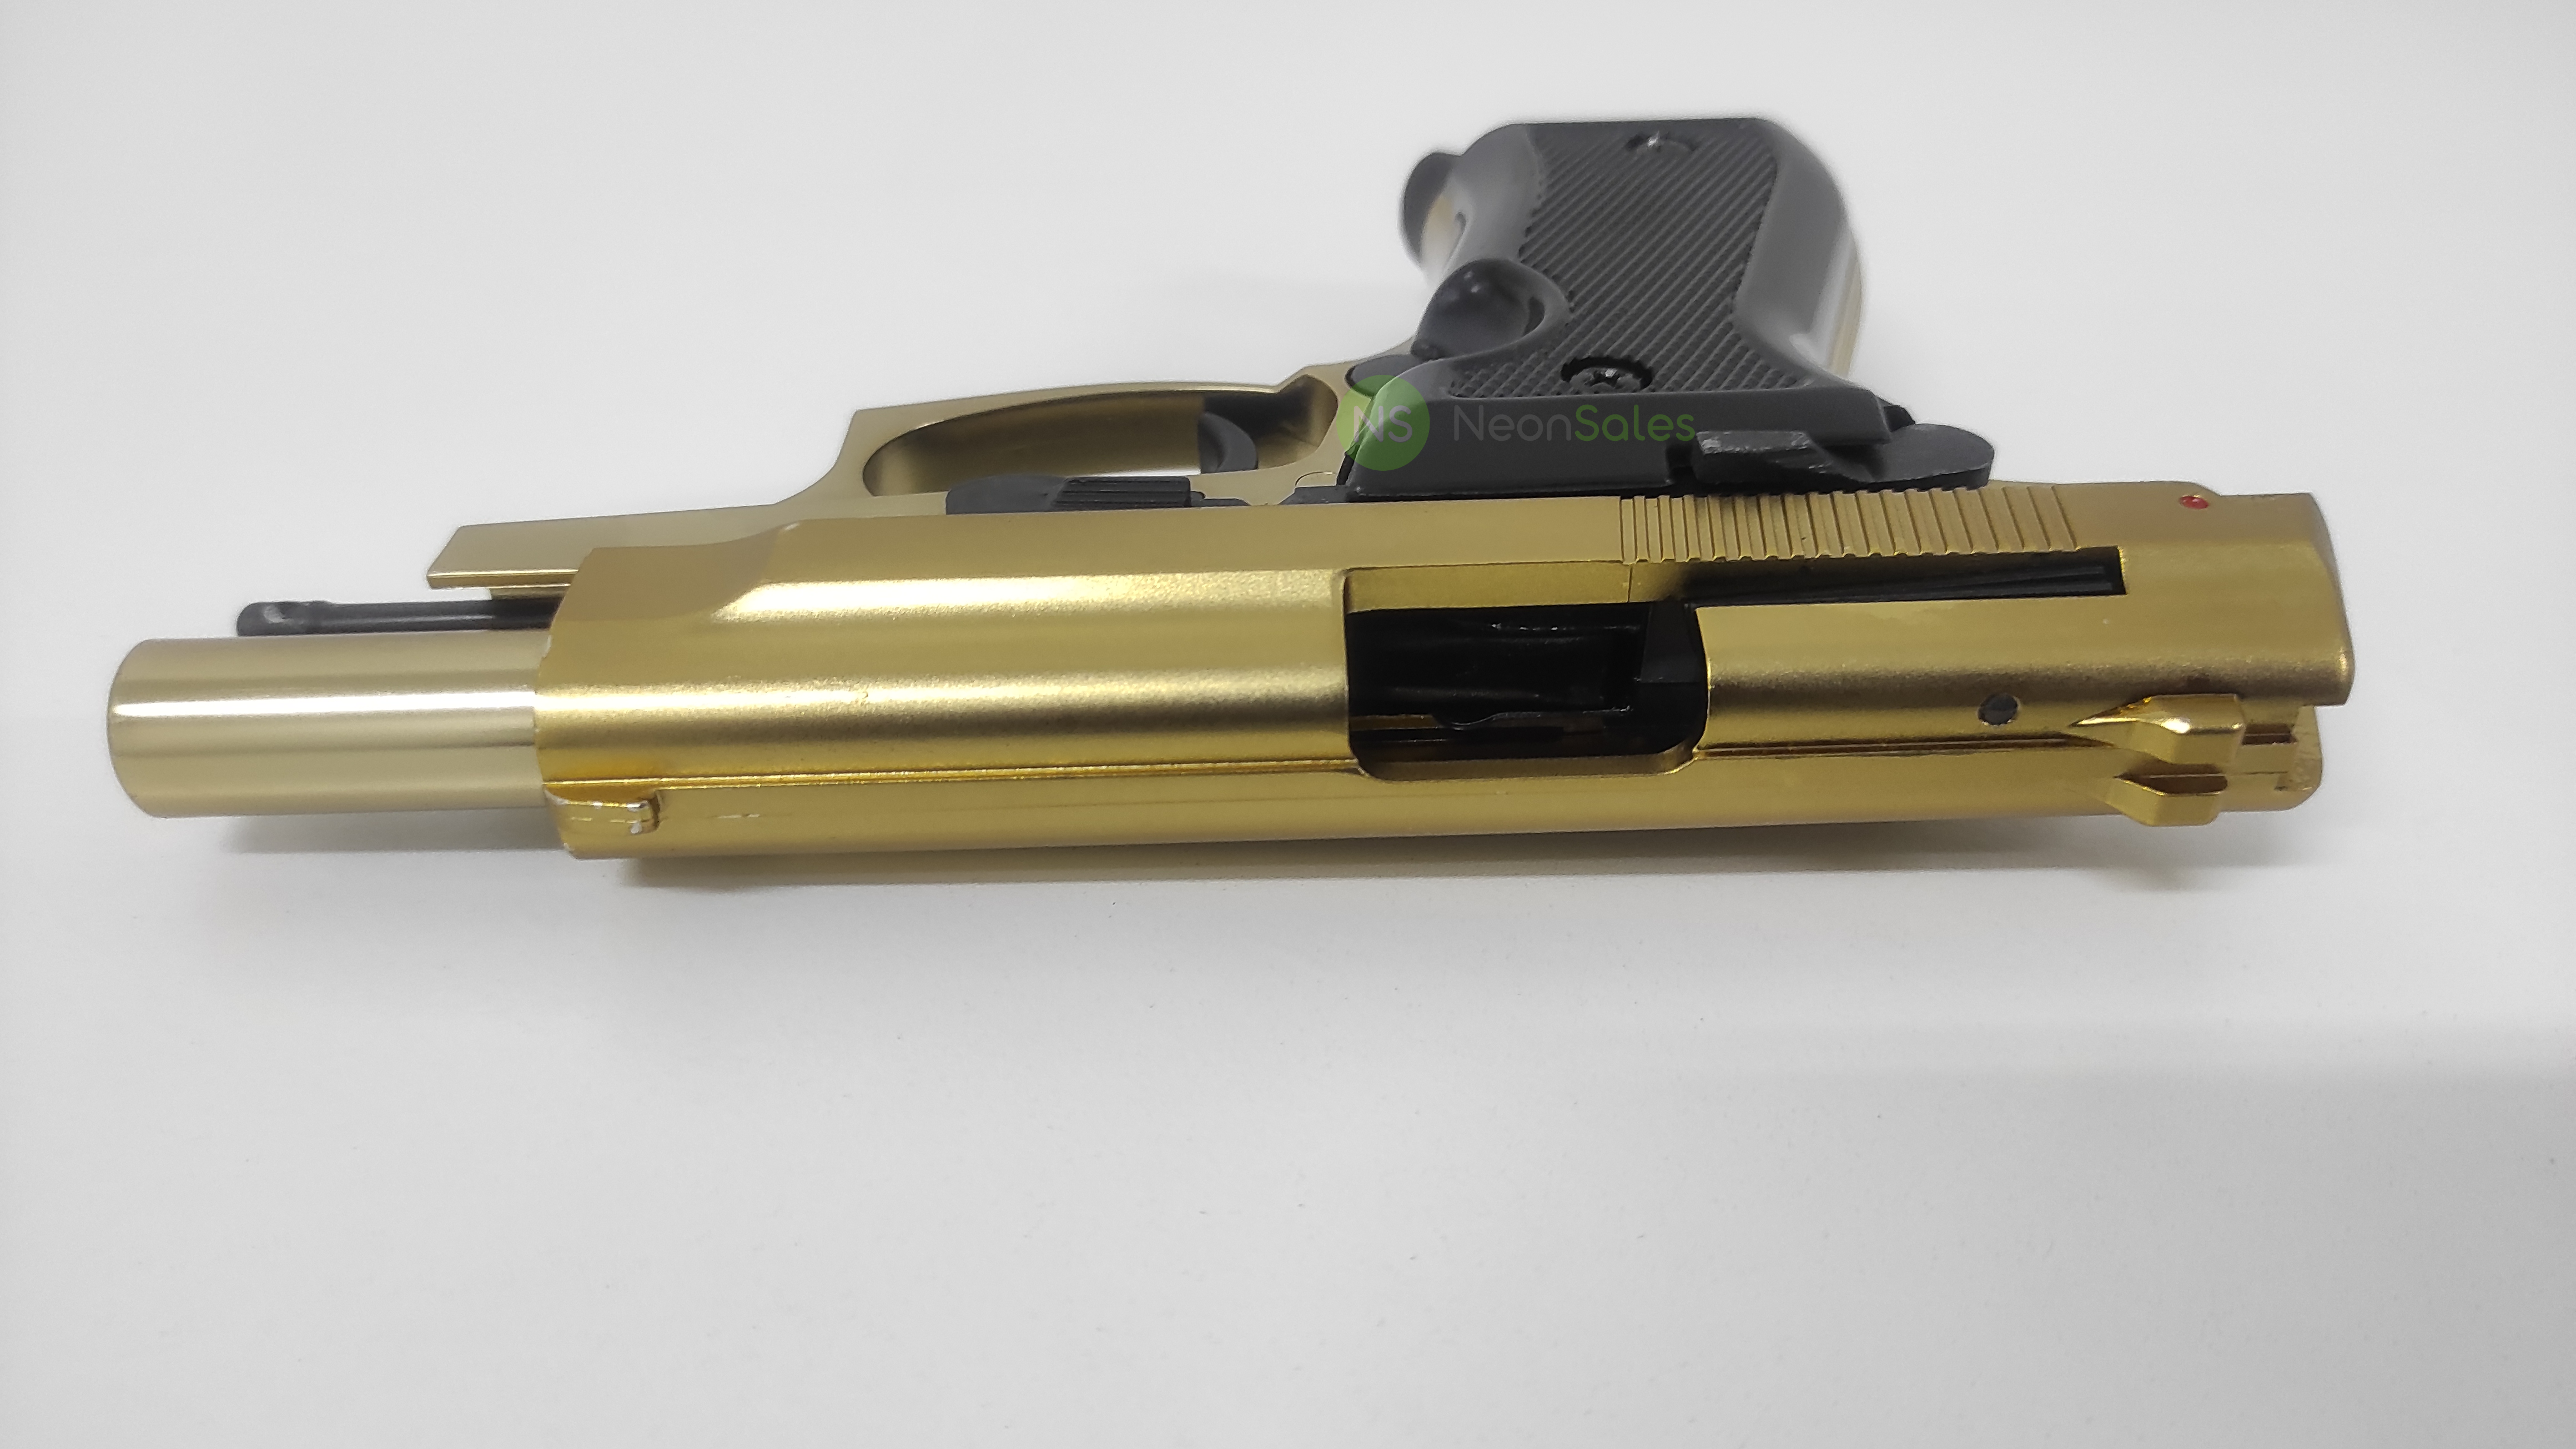 BLOW P29 BLANK GUN - GOLD W/ BLACK GRIPS & TRIM